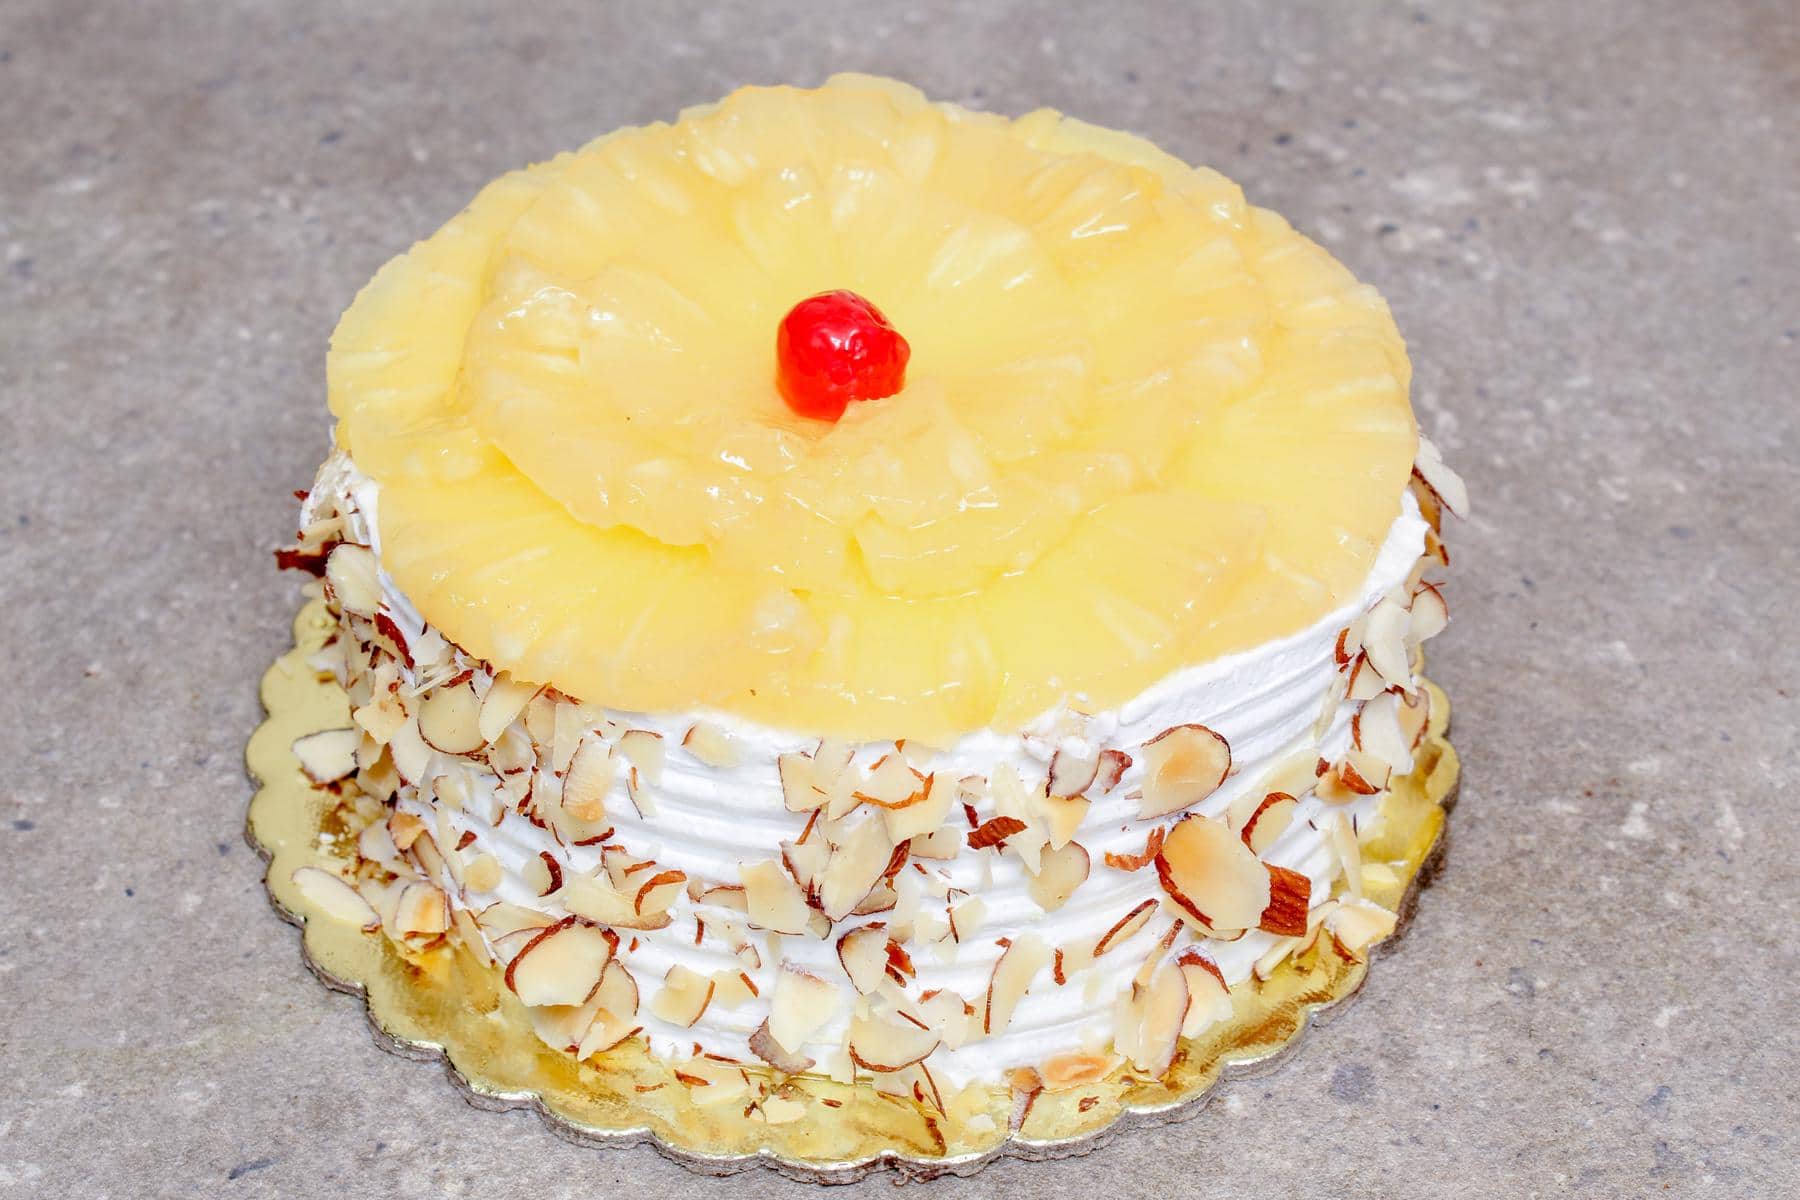 File:Mathura Cake 08.jpg - Wikimedia Commons